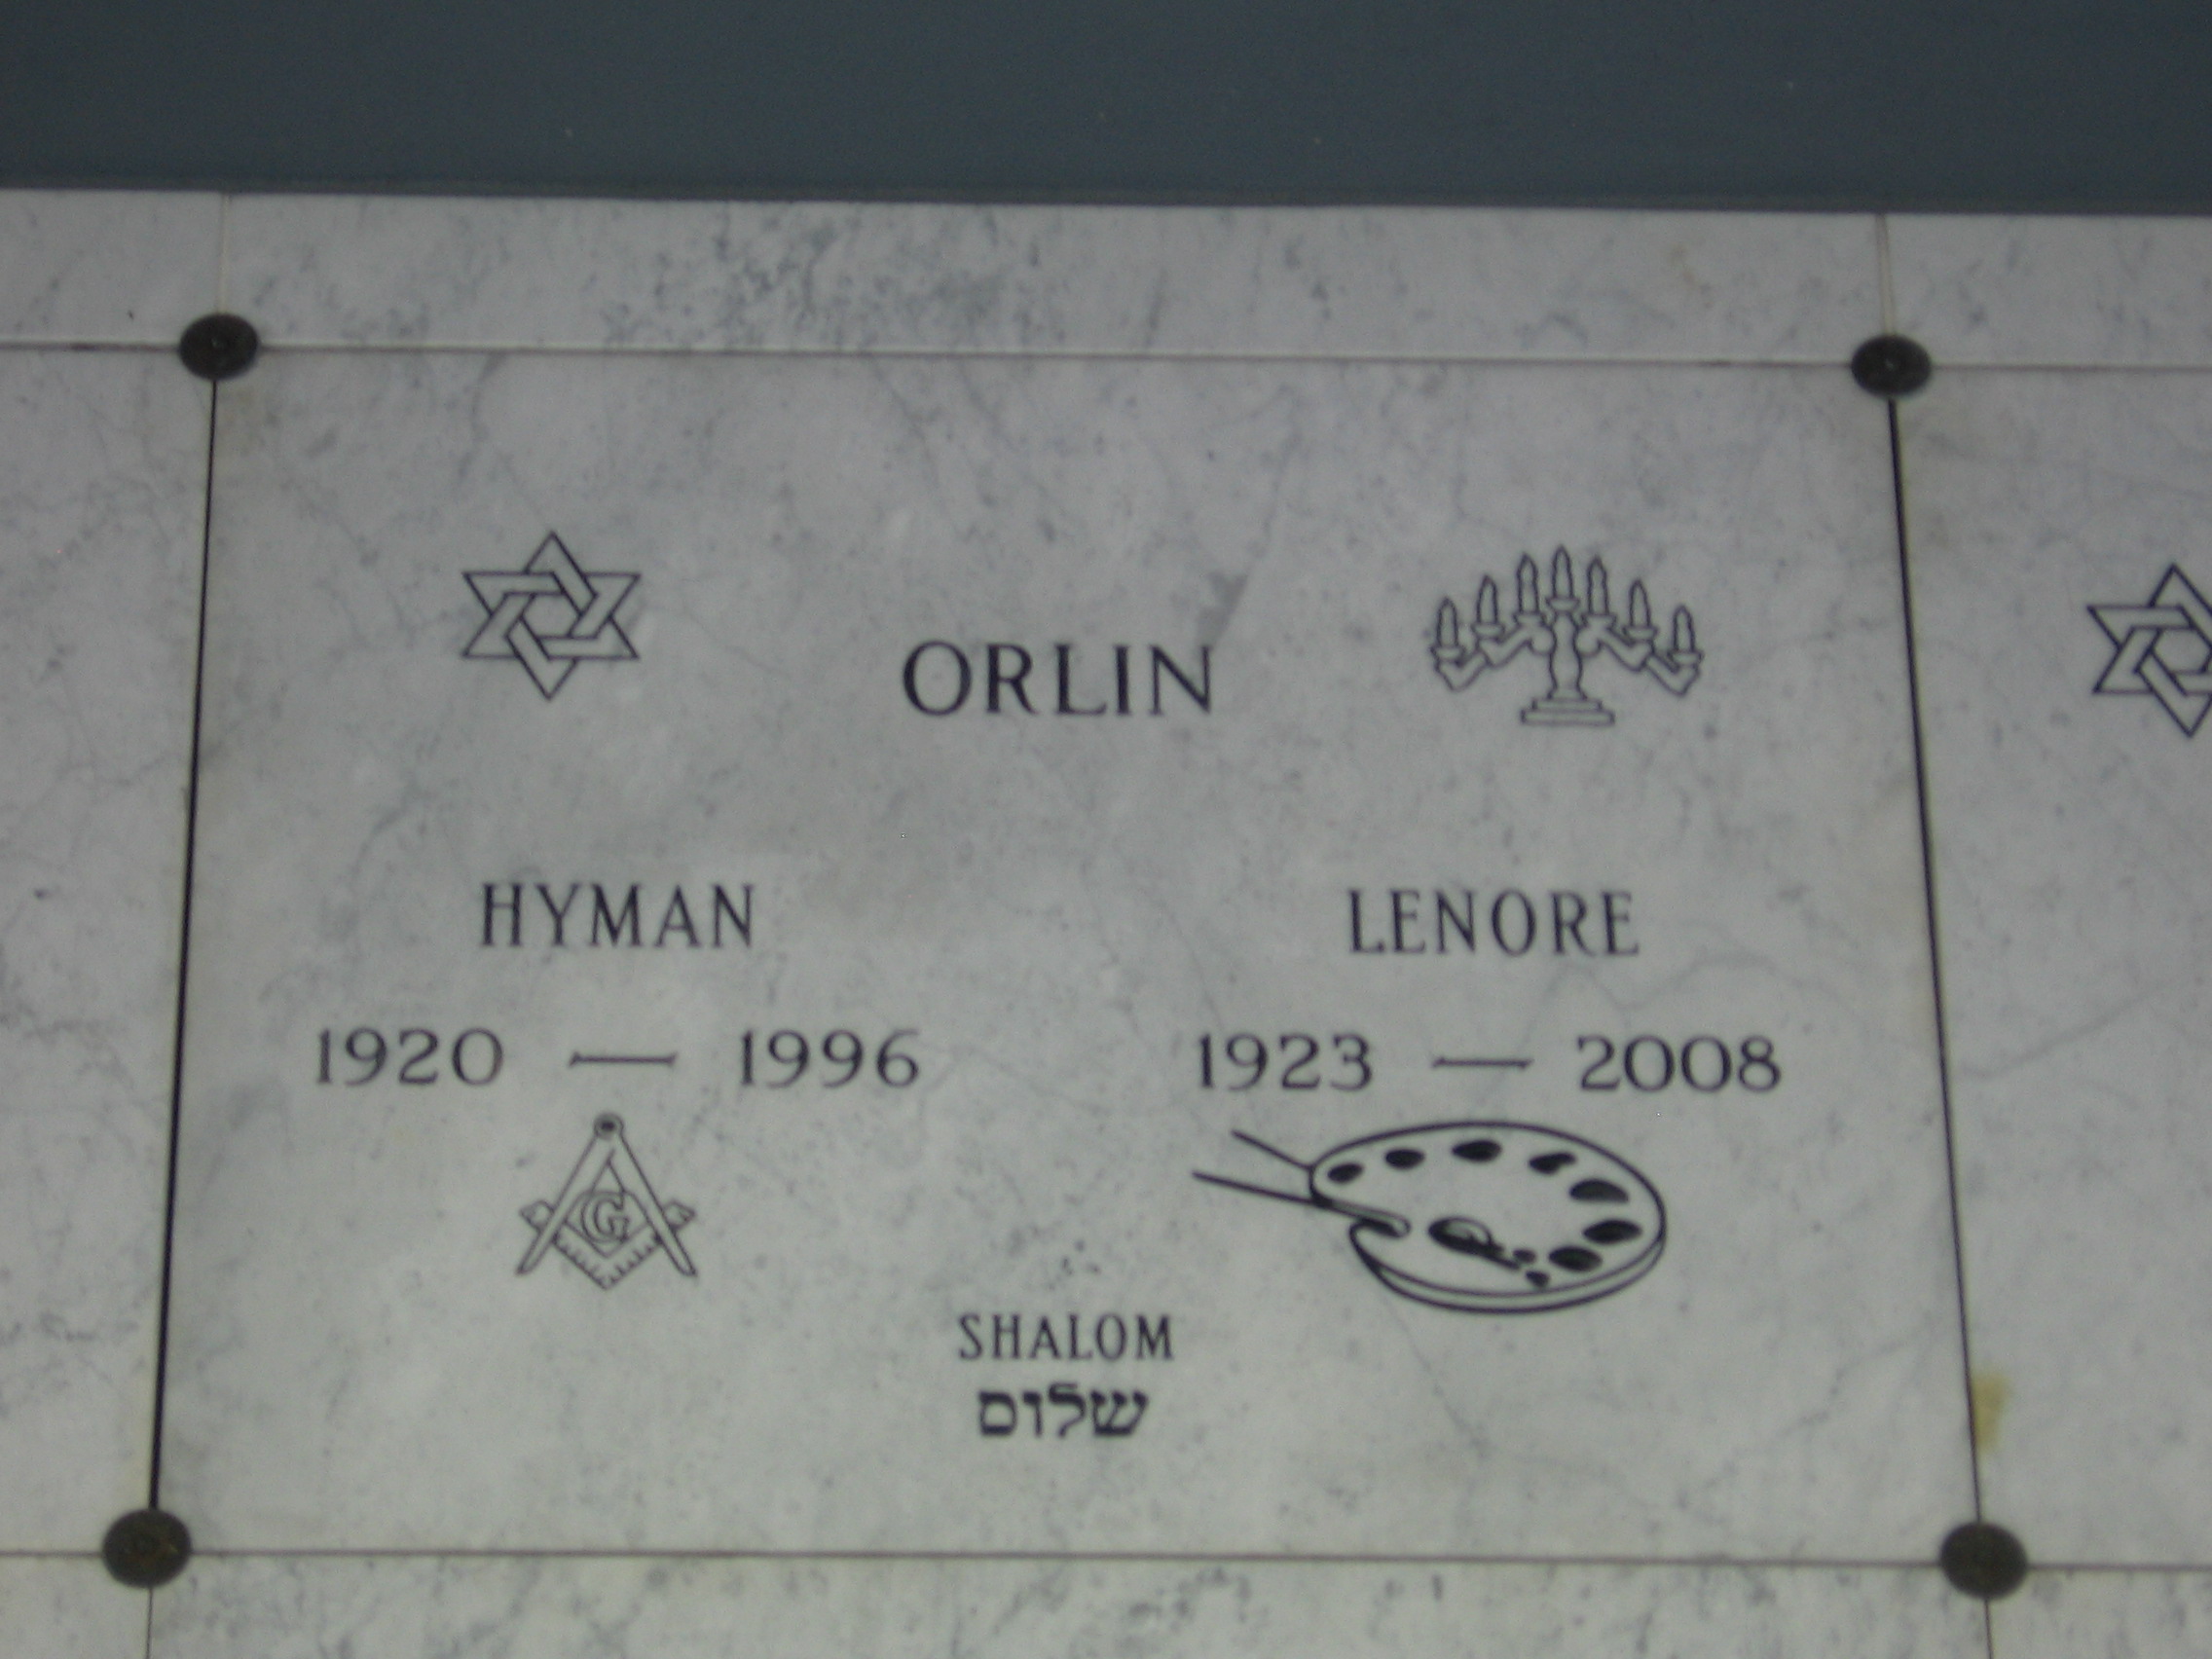 Hyman Orlin